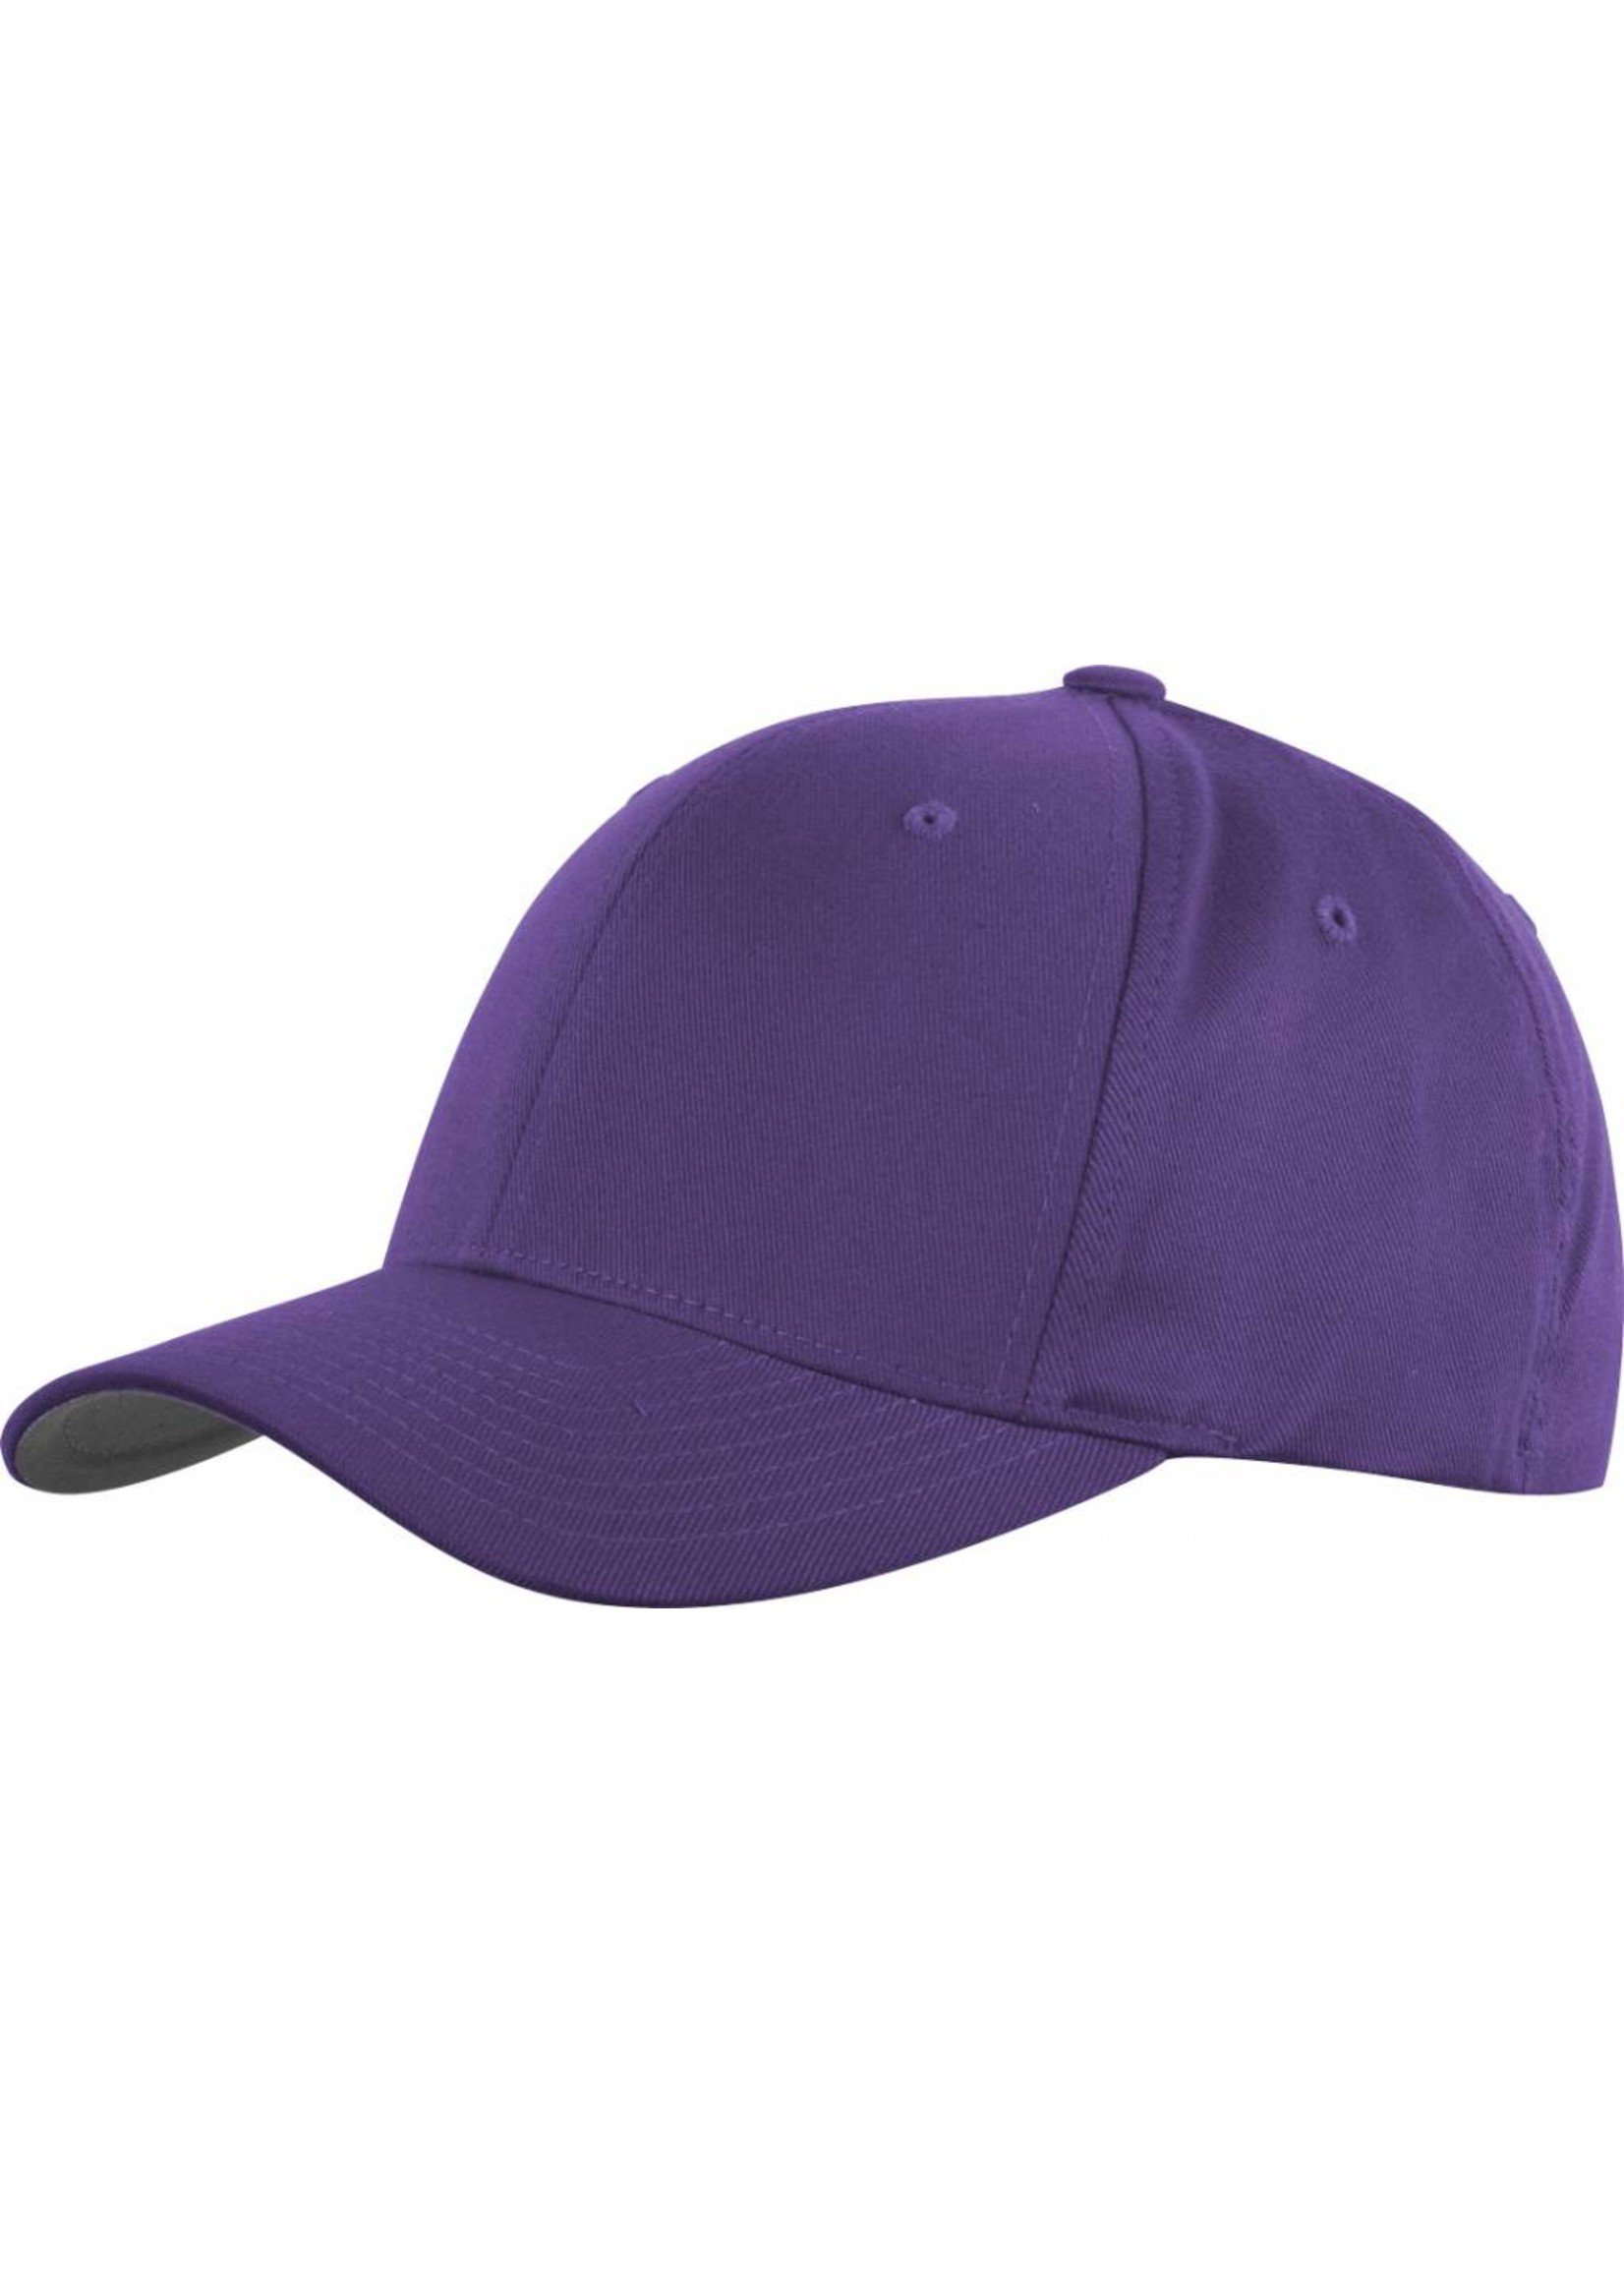 Flexfit WOOLY COMBED 6277 Cap purple/grey